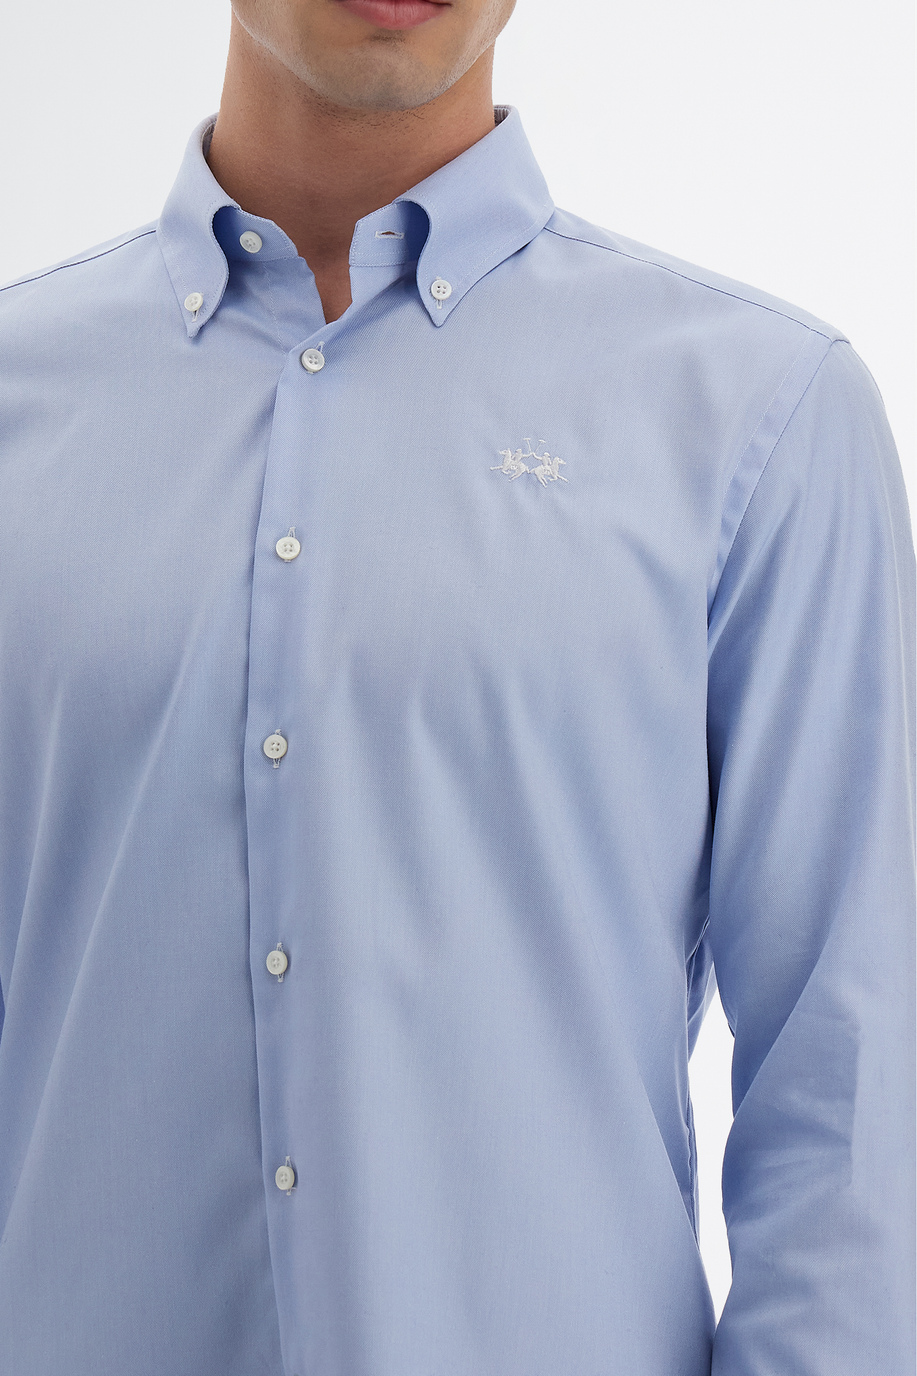 Camicia uomo Blue Ribbon in cotone a maniche lunghe regular fit - Look eleganti per lui | La Martina - Official Online Shop